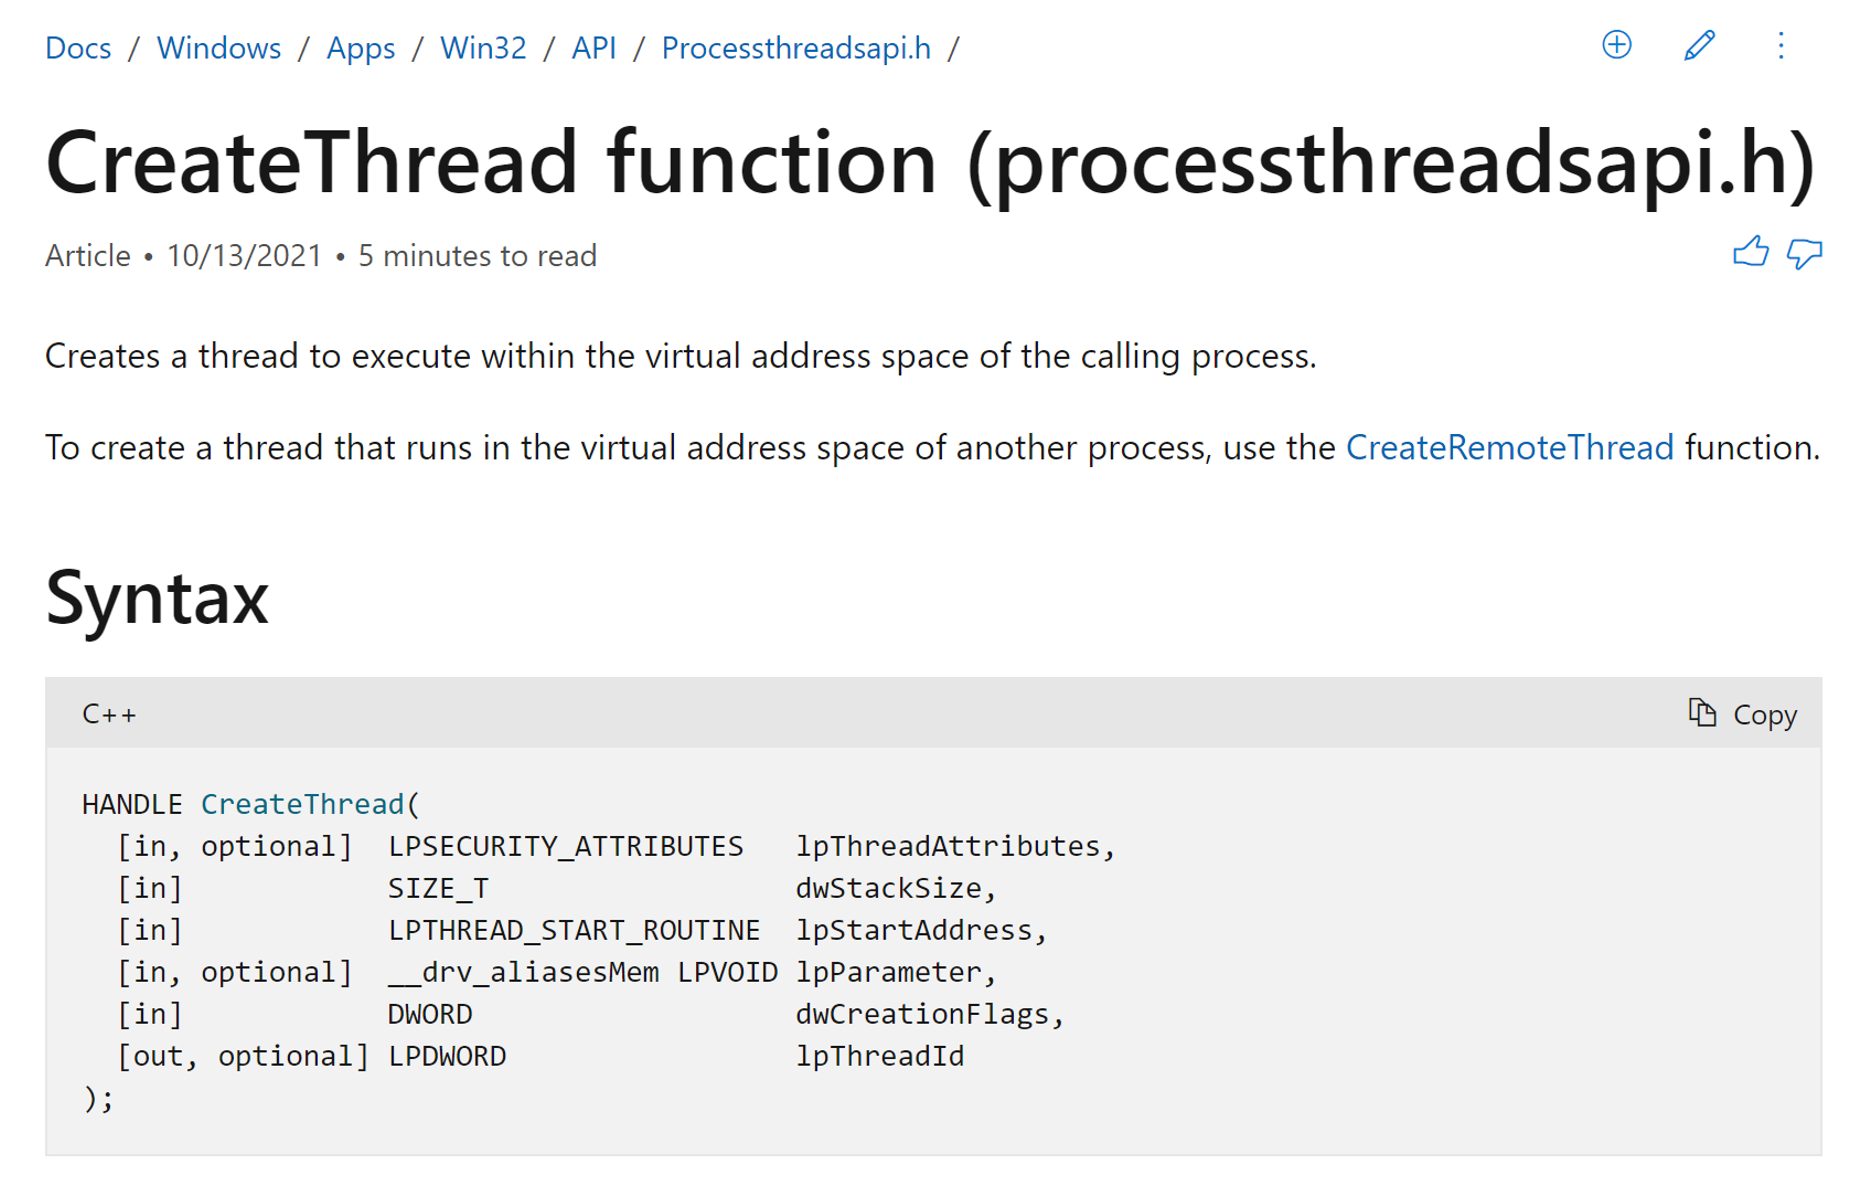 Microsoft documentation for the CreateThread API